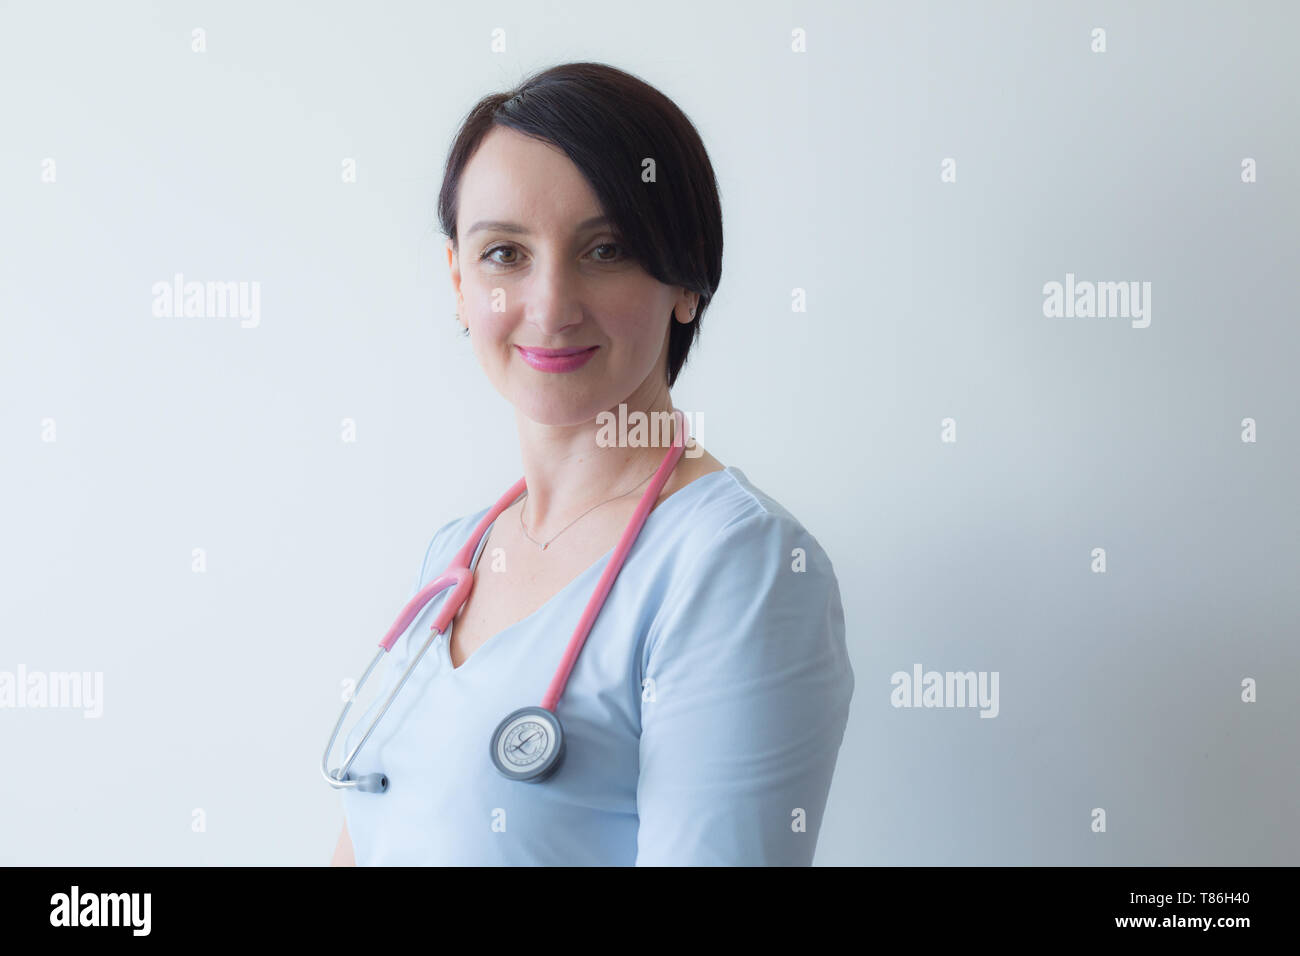 Doctor female portrait  stethoscope light blue uniform  Stock Photo